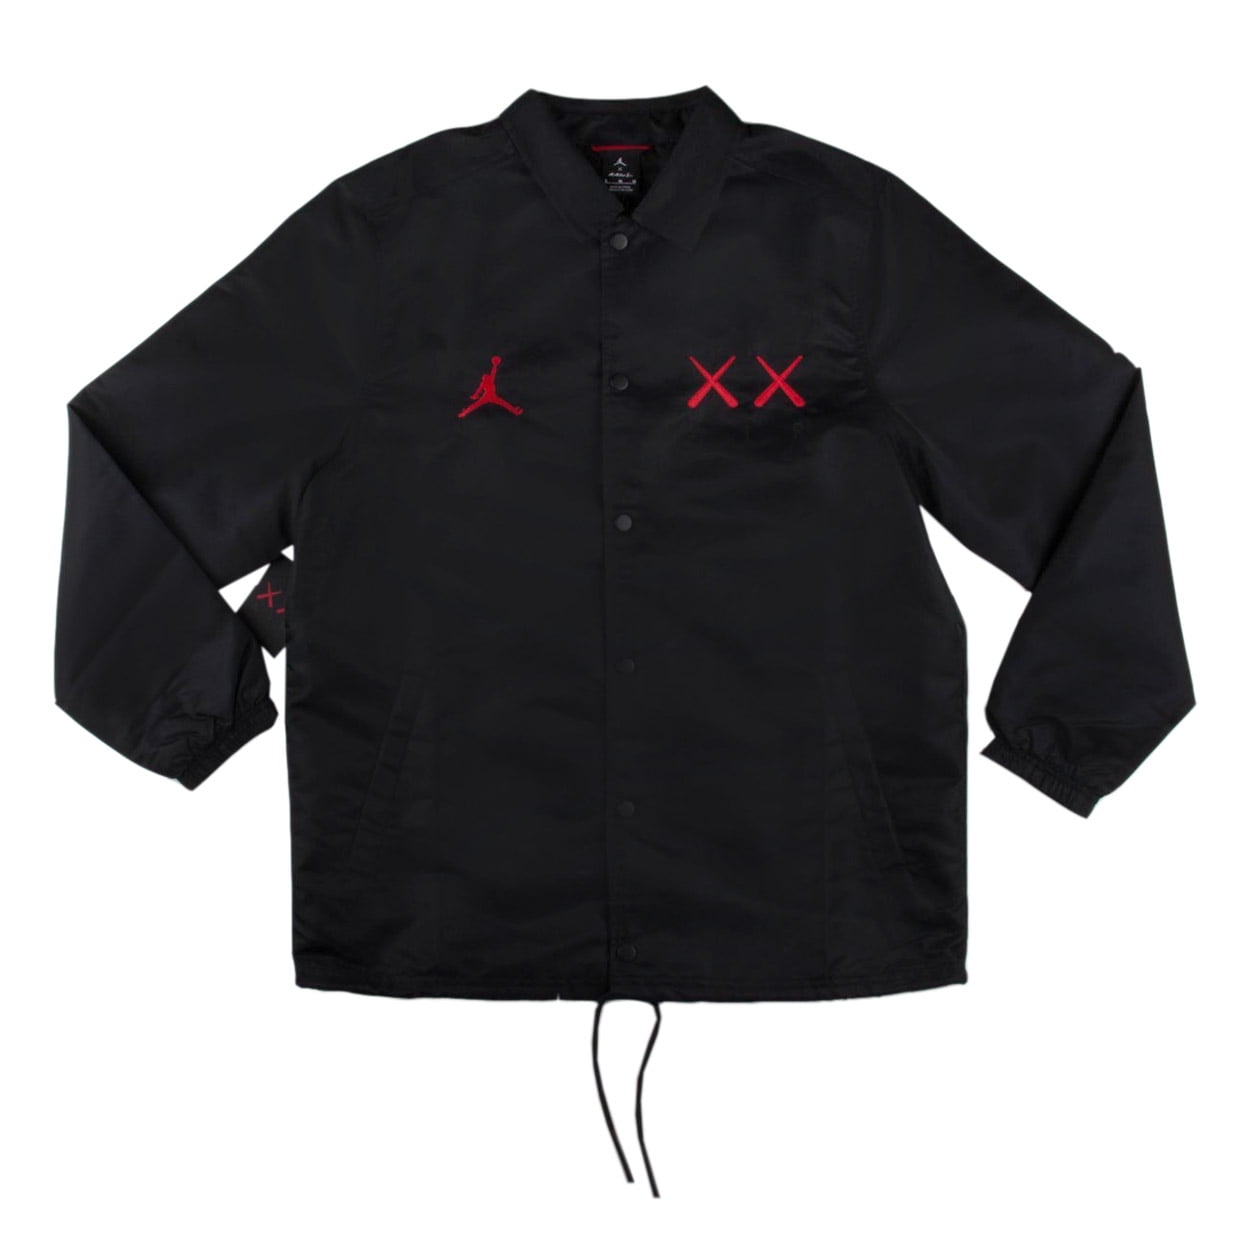 Nike KAWS X Jordan Energy Coaches Jacket Black/Red - Walmart.com